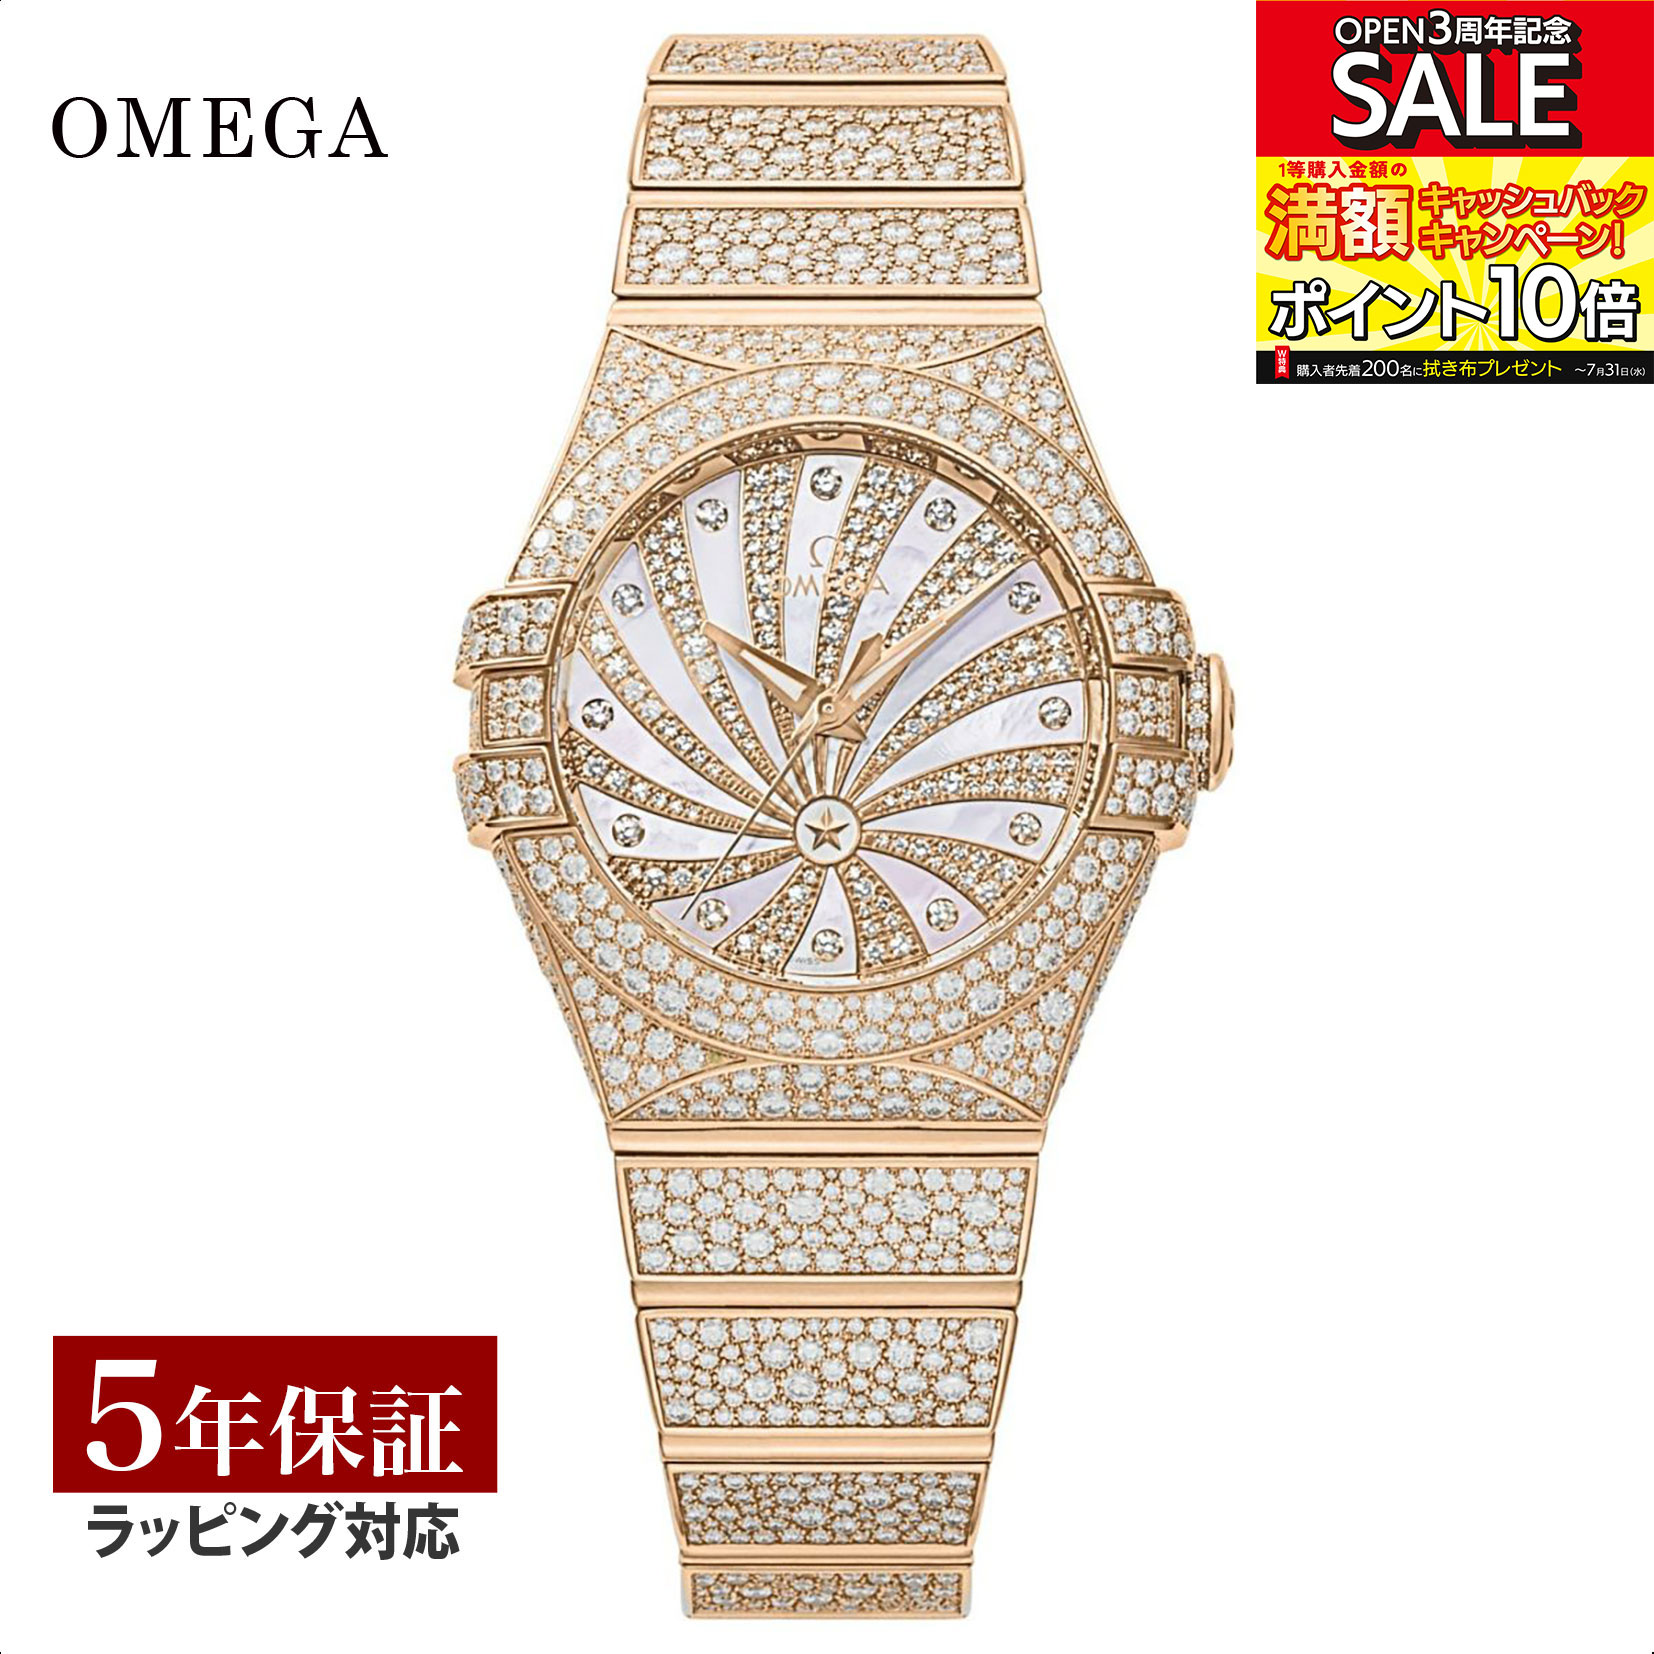 OMEGA オメガ CONSTELLATION コンステレーション 123.55.31.20.55.006 金無垢 ダイヤ 時計 腕時計 高級腕時計 ブランド